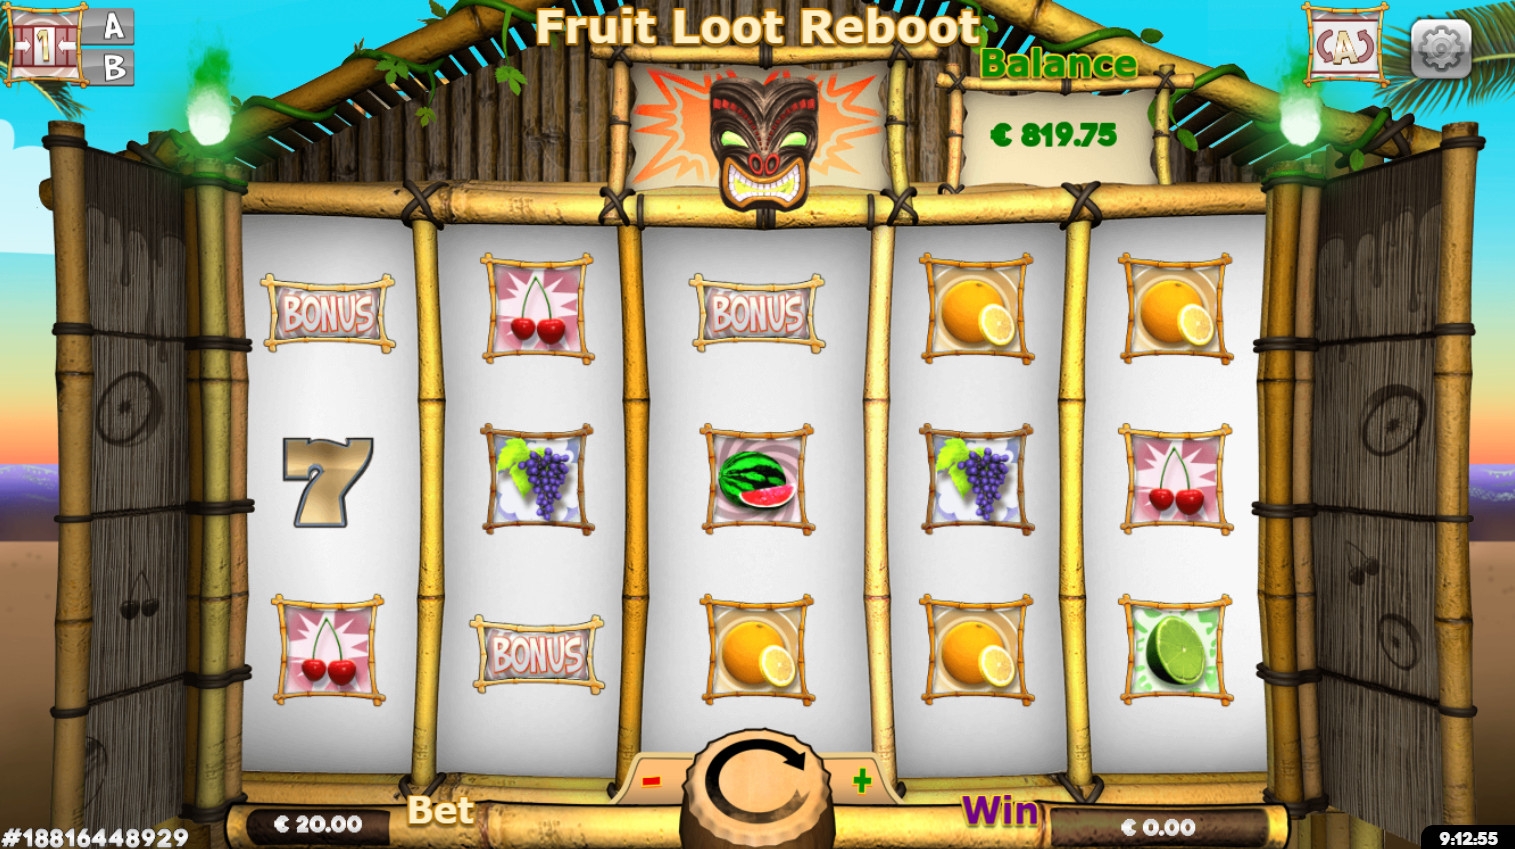 Fruit Loot Reboot (Fruit Loot Reboot) from category Slots